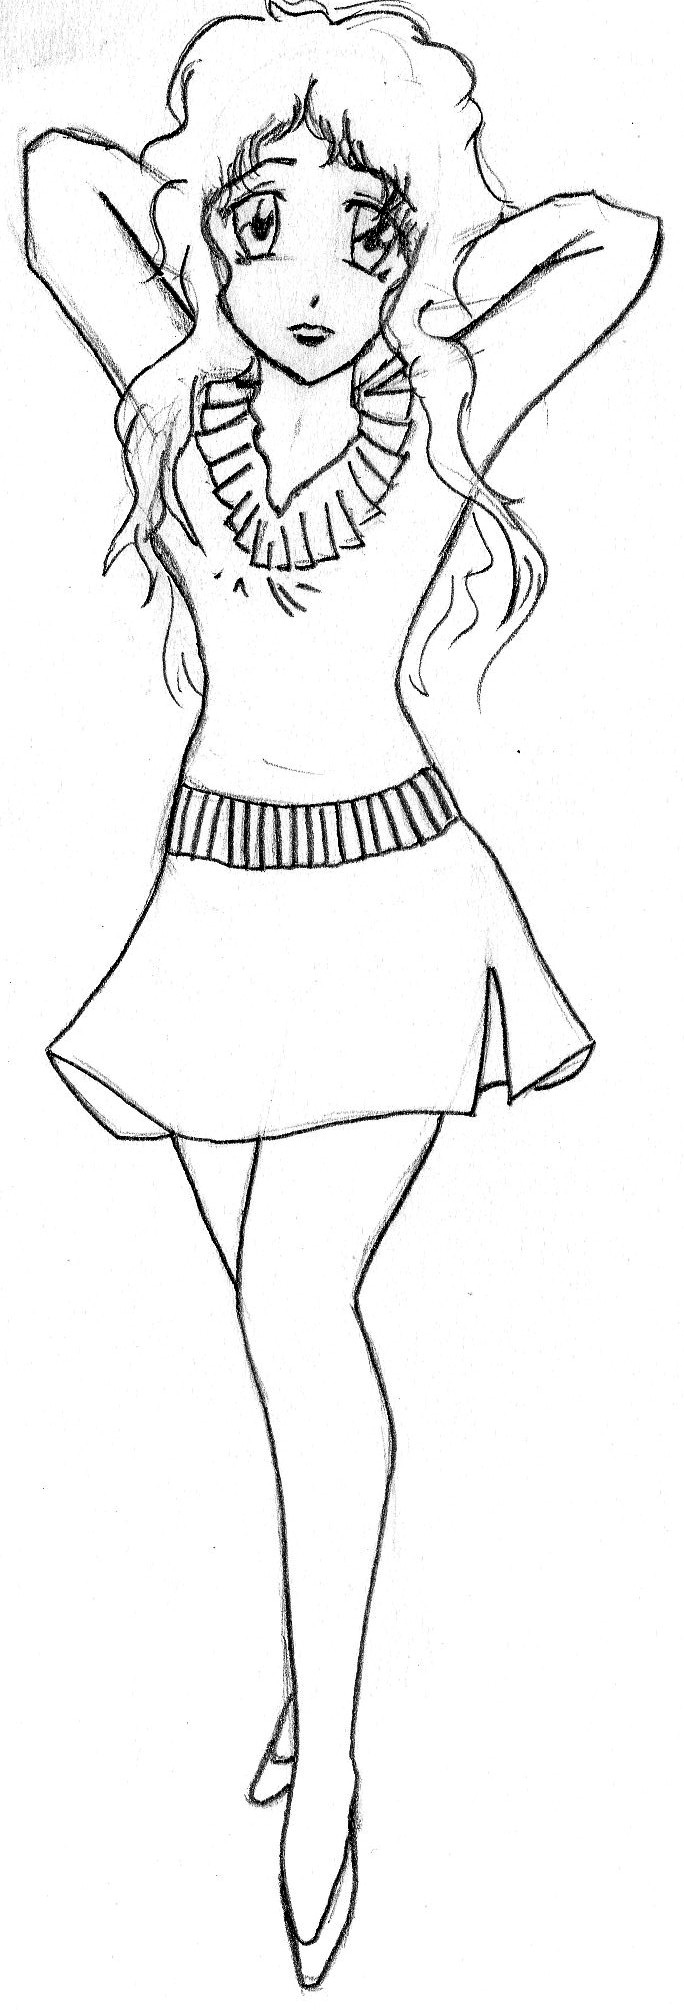 Girl Sketch